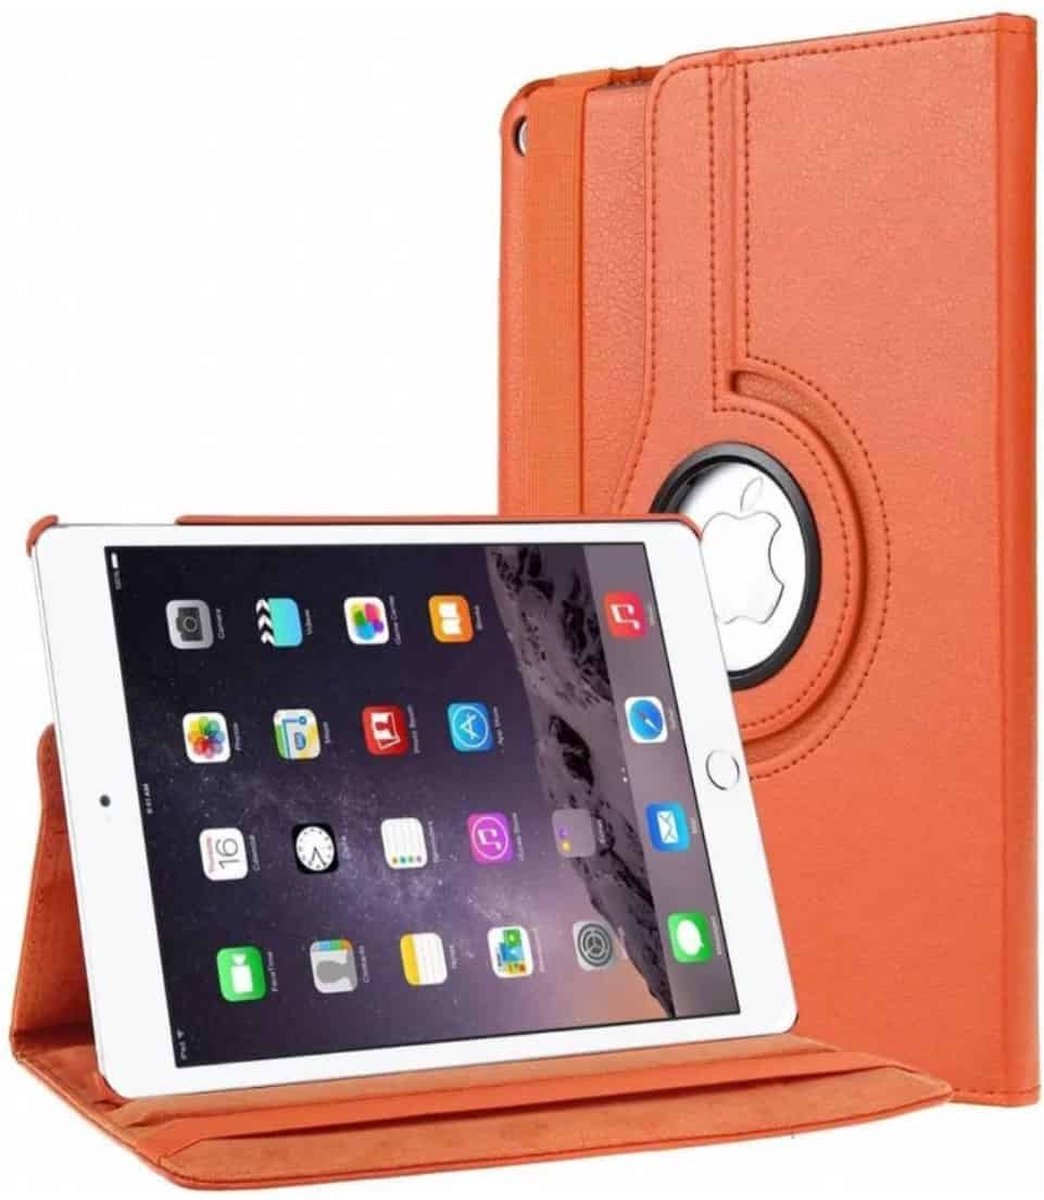 FONU 360 Boekmodel Hoes iPad Air 2 2014 - 9.7 inch - A1566 - A1567 Draaibaar - Oranje